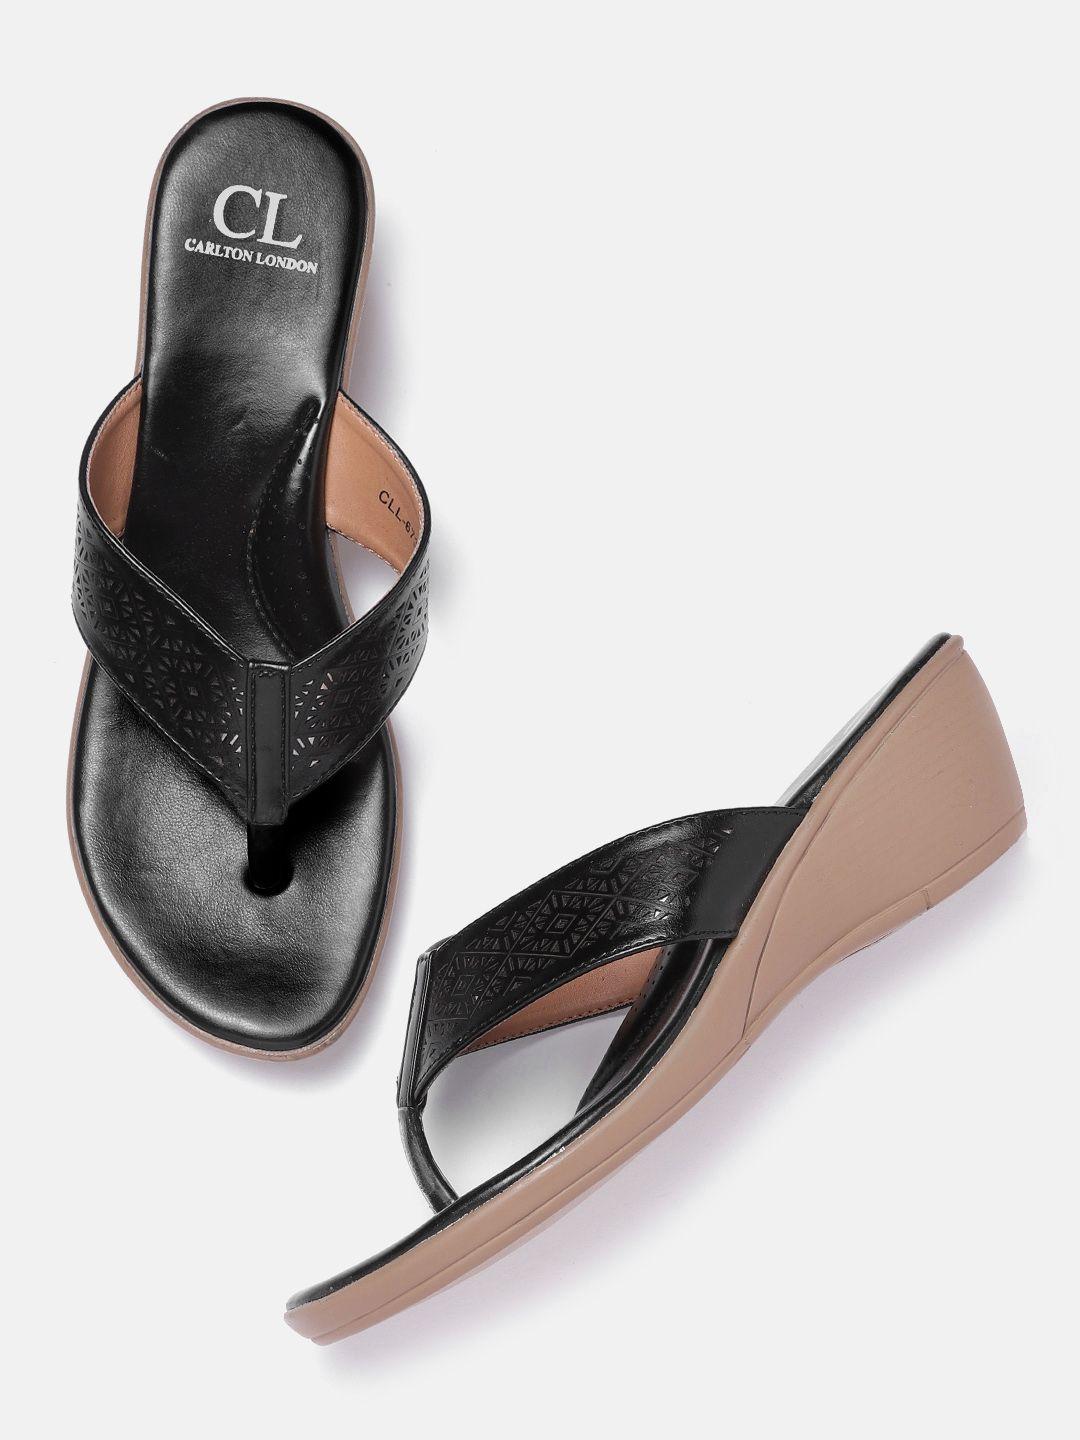 carlton-london-women-black-wedge-heels-with-laser-cuts